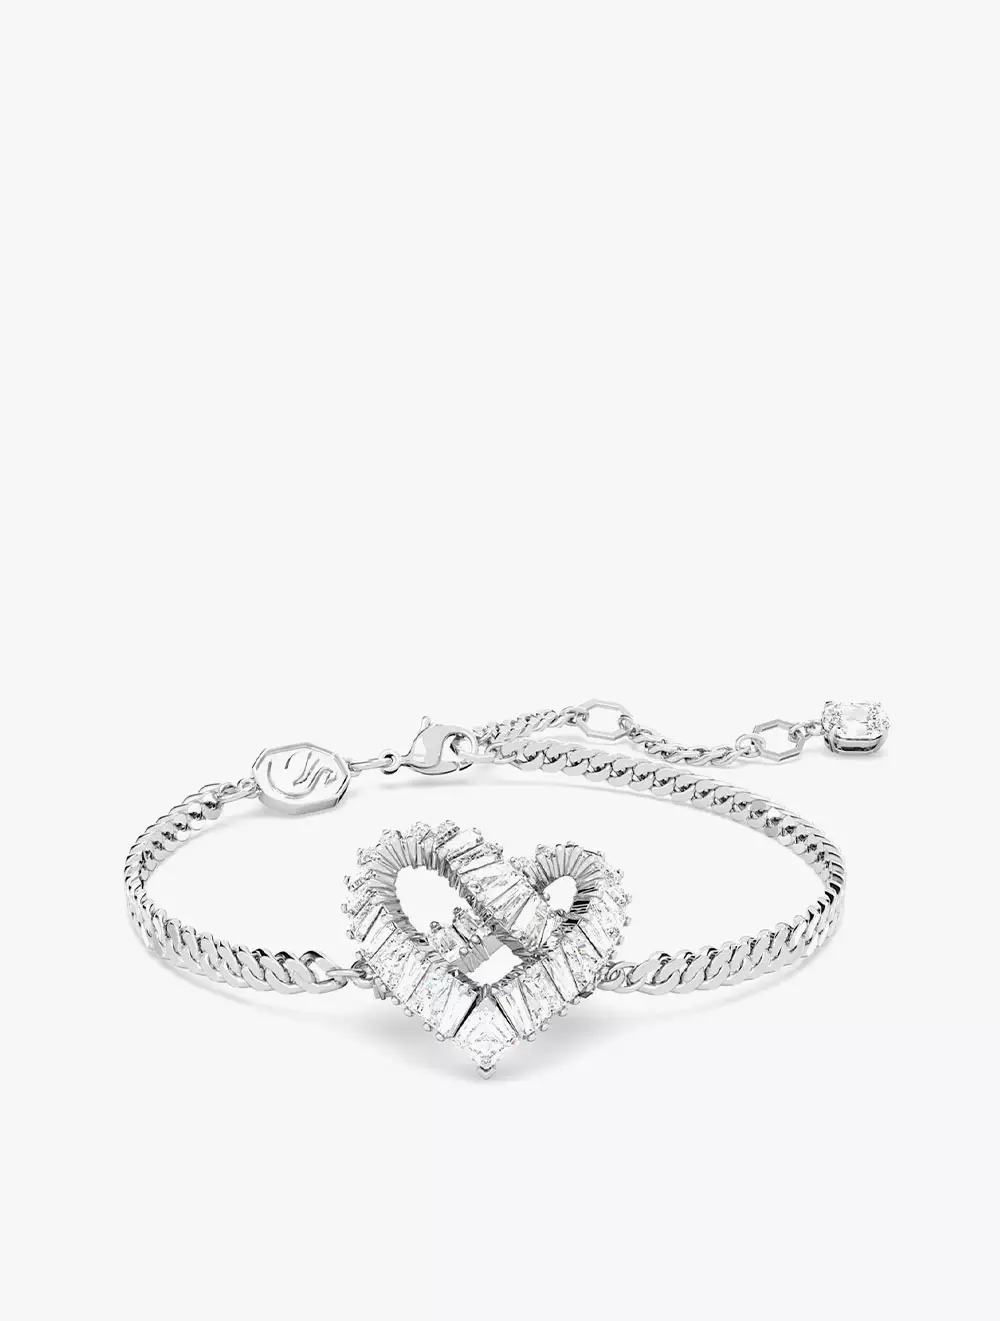 Swarovski Infinity bracelet, Infinity and heart, White, Rhodium plated